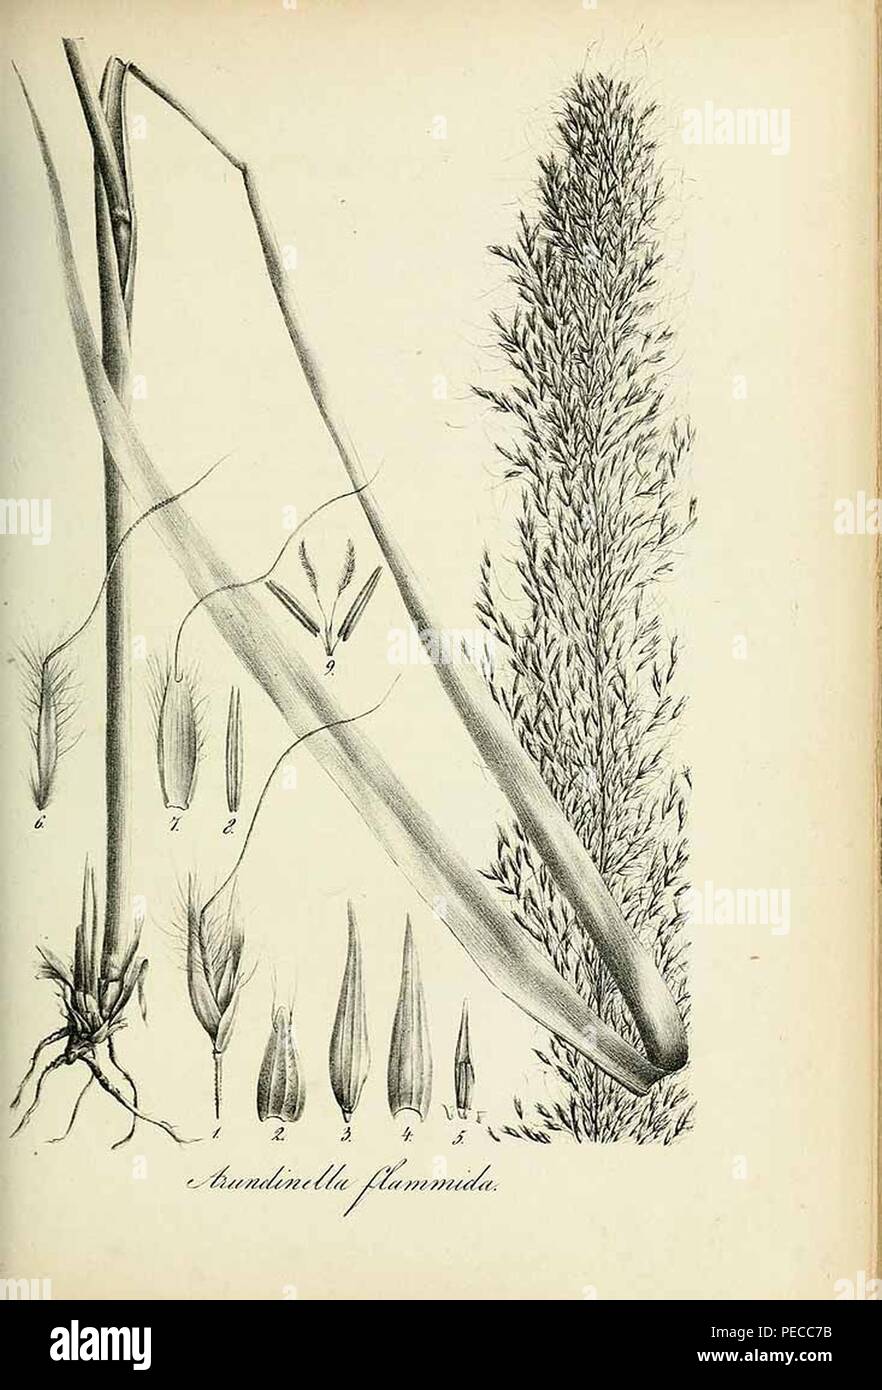 Arundinella flammida - Species graminum - Volume 3. Stock Photo